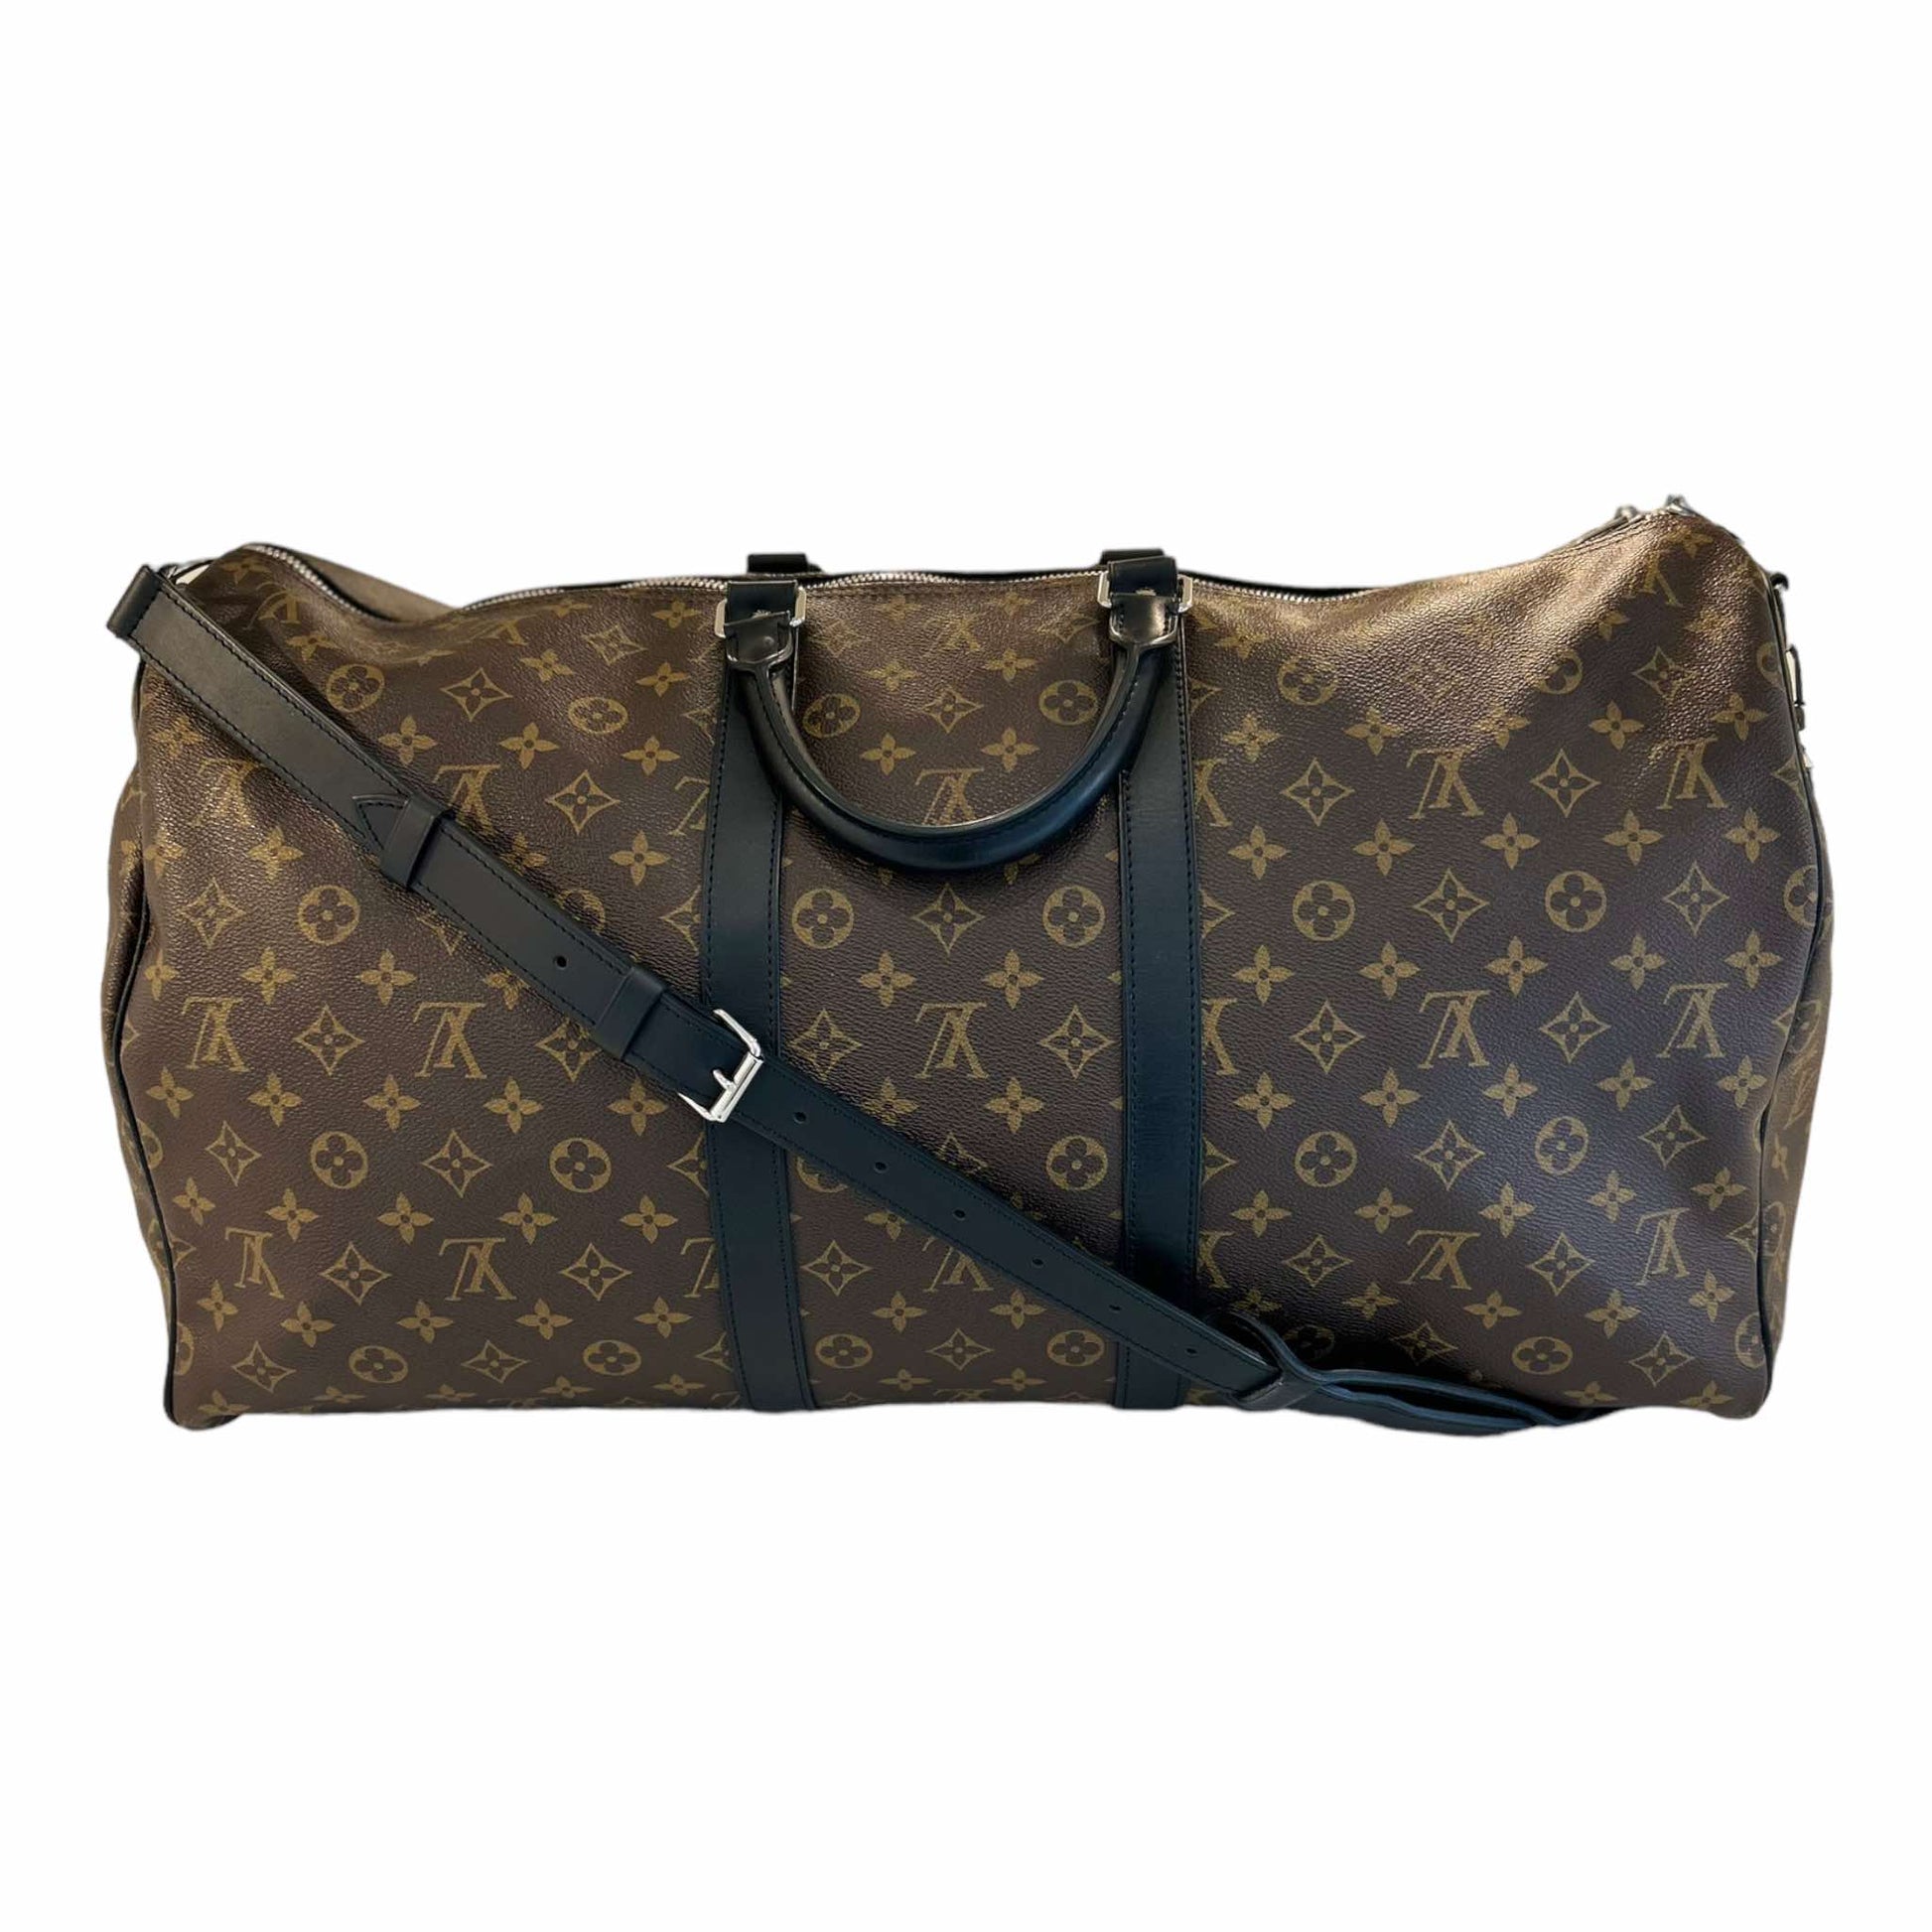 Louis Vuitton - Carryall PM Bag - Black - Monogram Leather - Women - Luxury